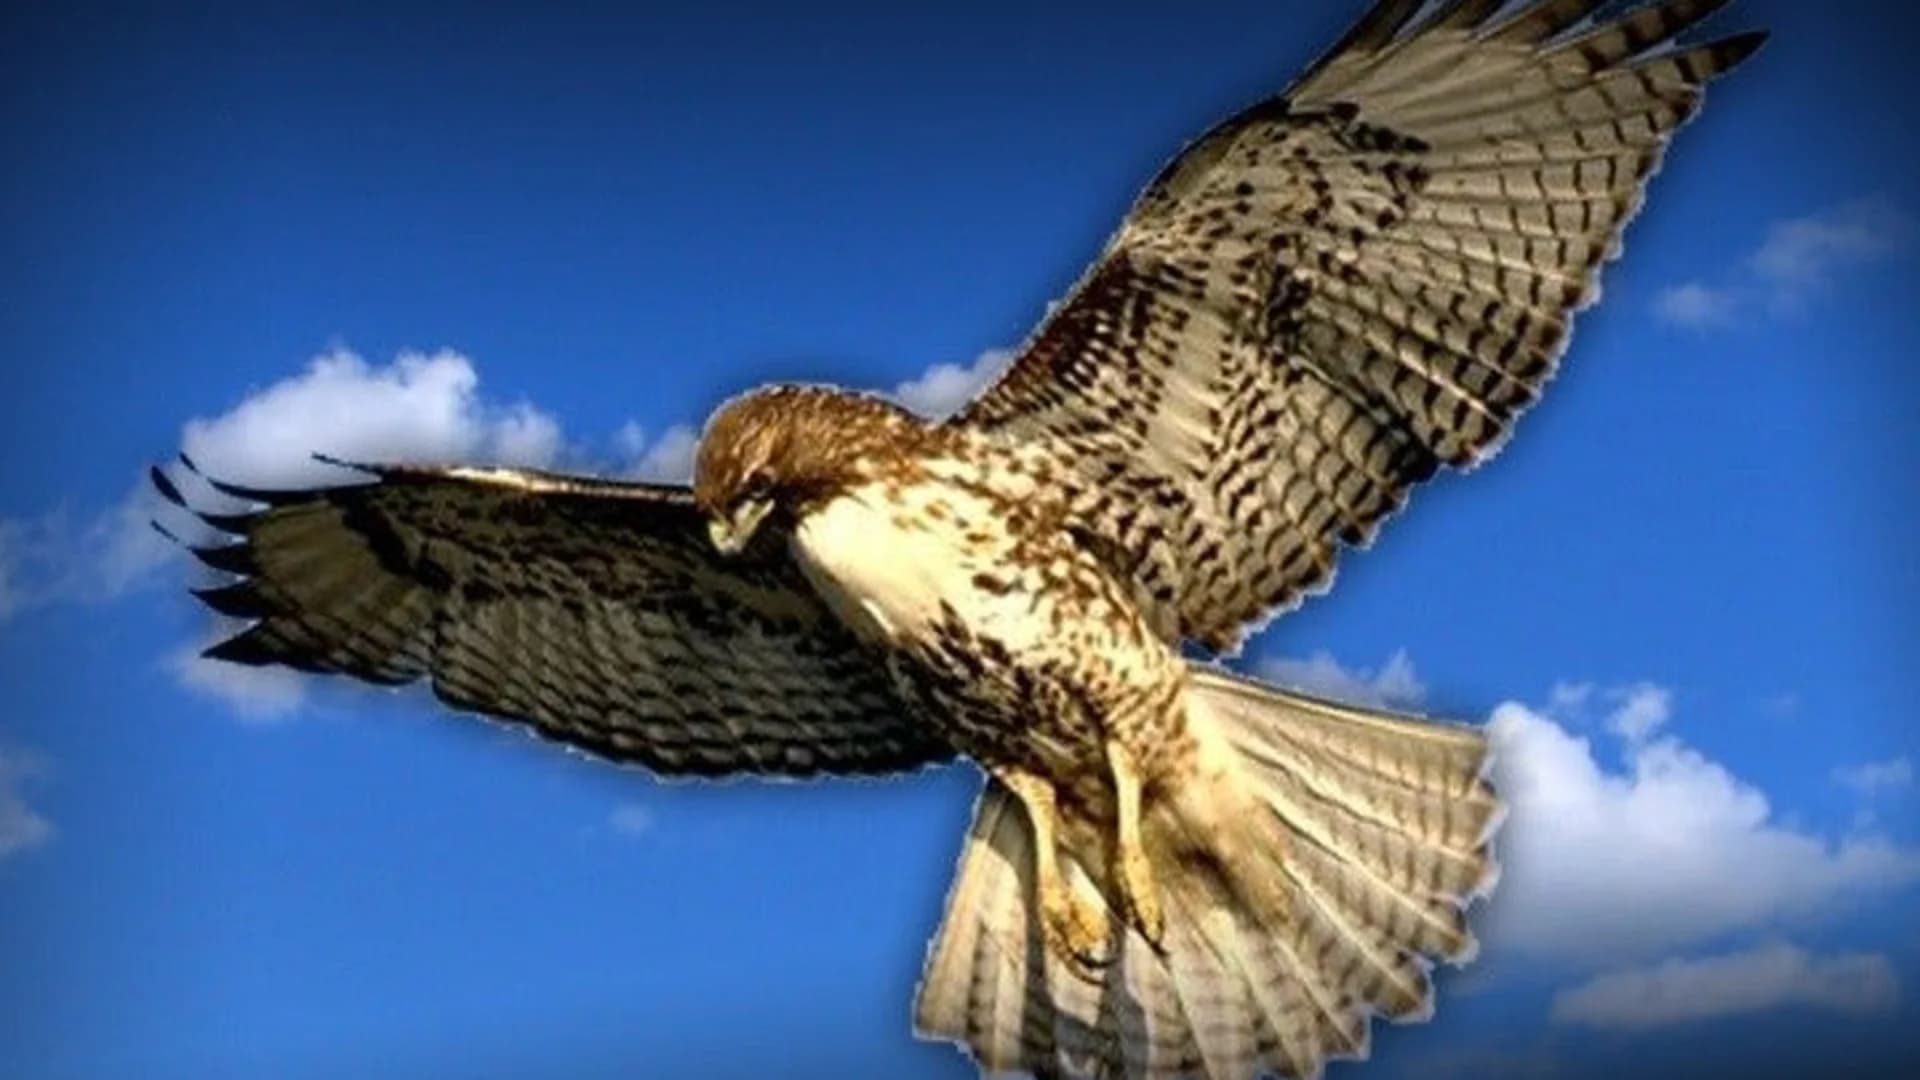 Stamford racing pigeon owner receives probation for killing hawks